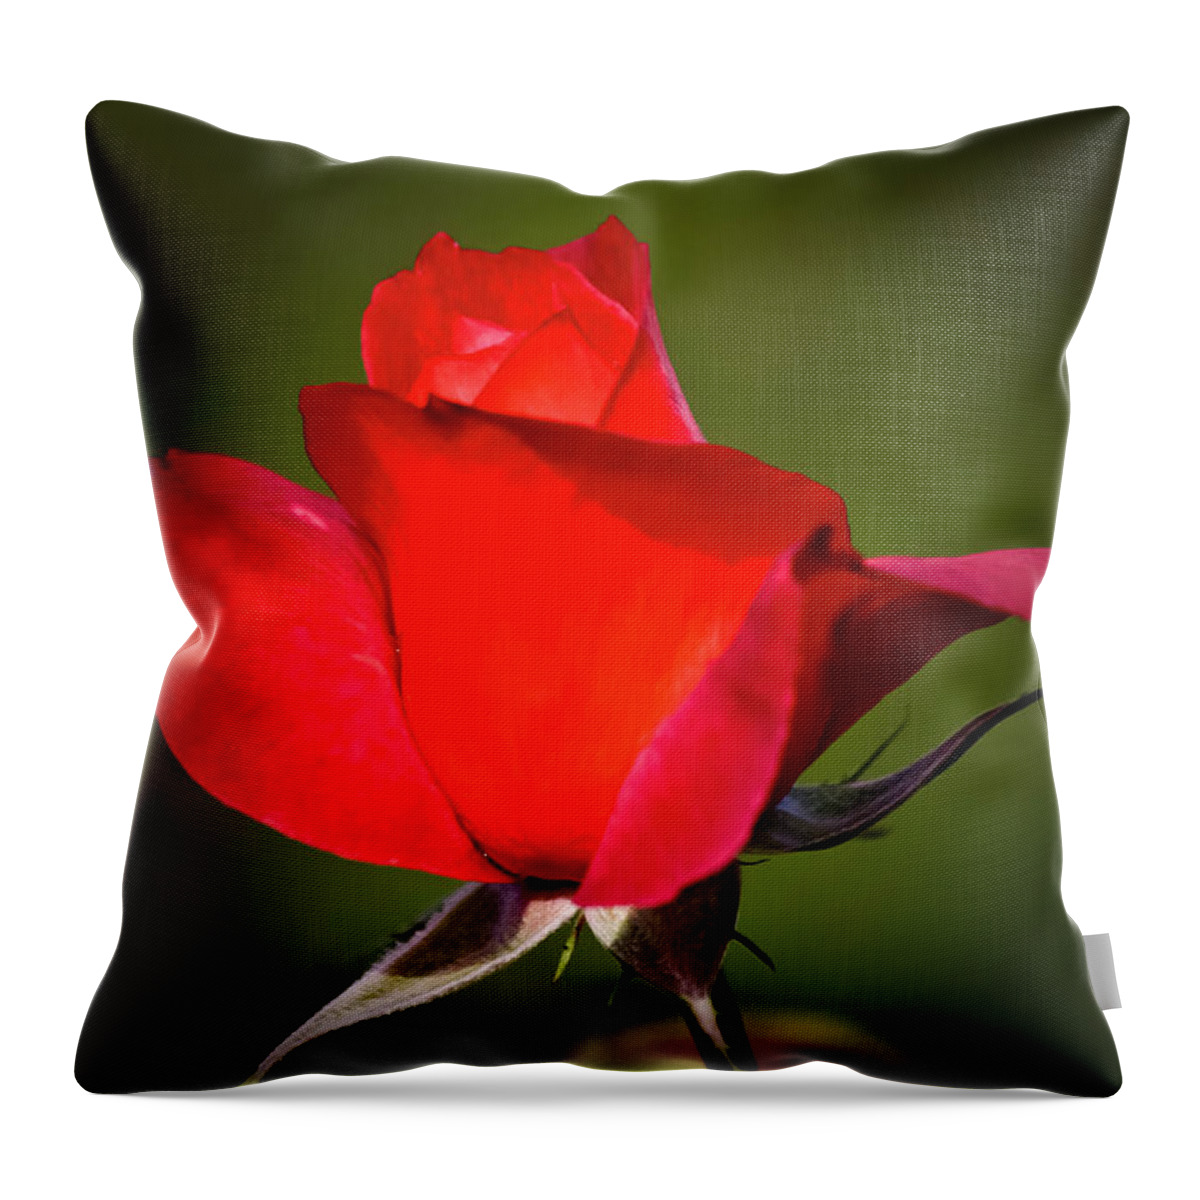 Garden Throw Pillow featuring the photograph Hot Cocoa Rose by Albert Seger